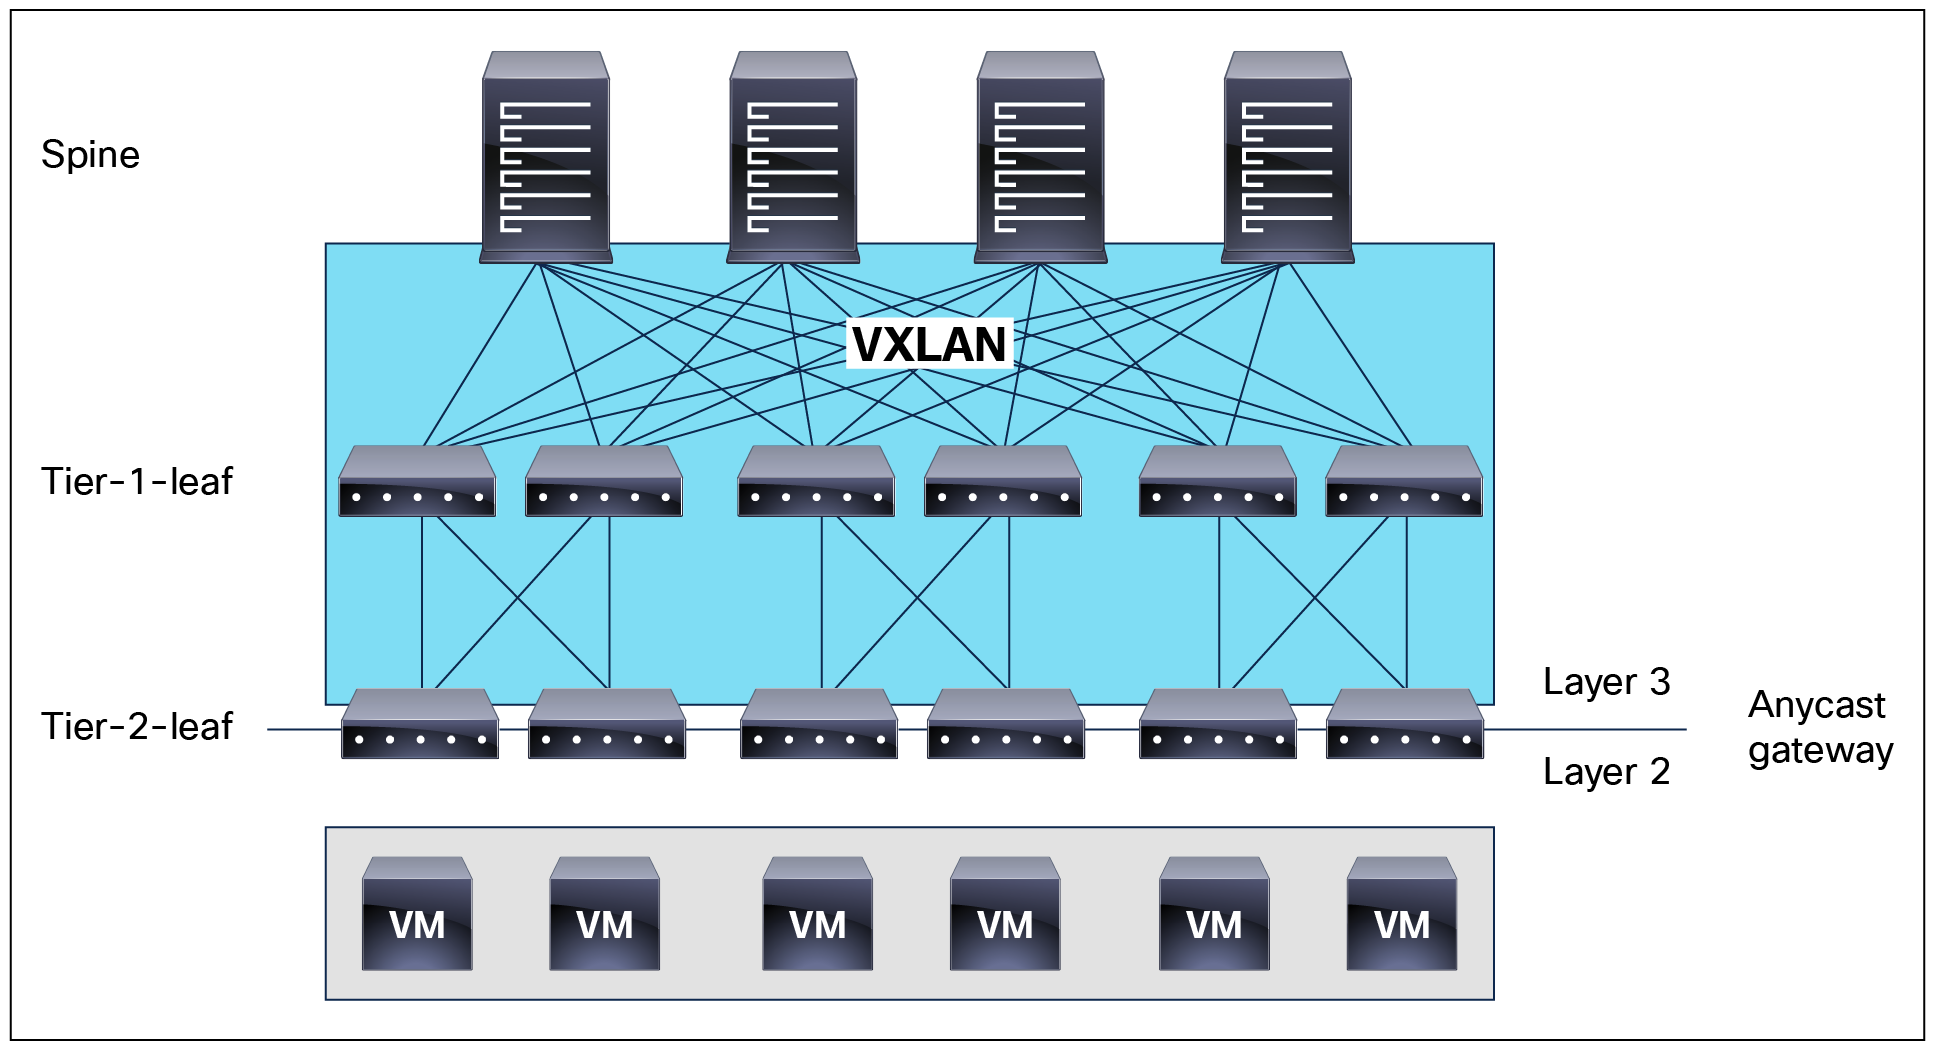 Cisco ACI Multi-tier architecture (spine, tier-1 leaf, and tier-2 leaf) topology